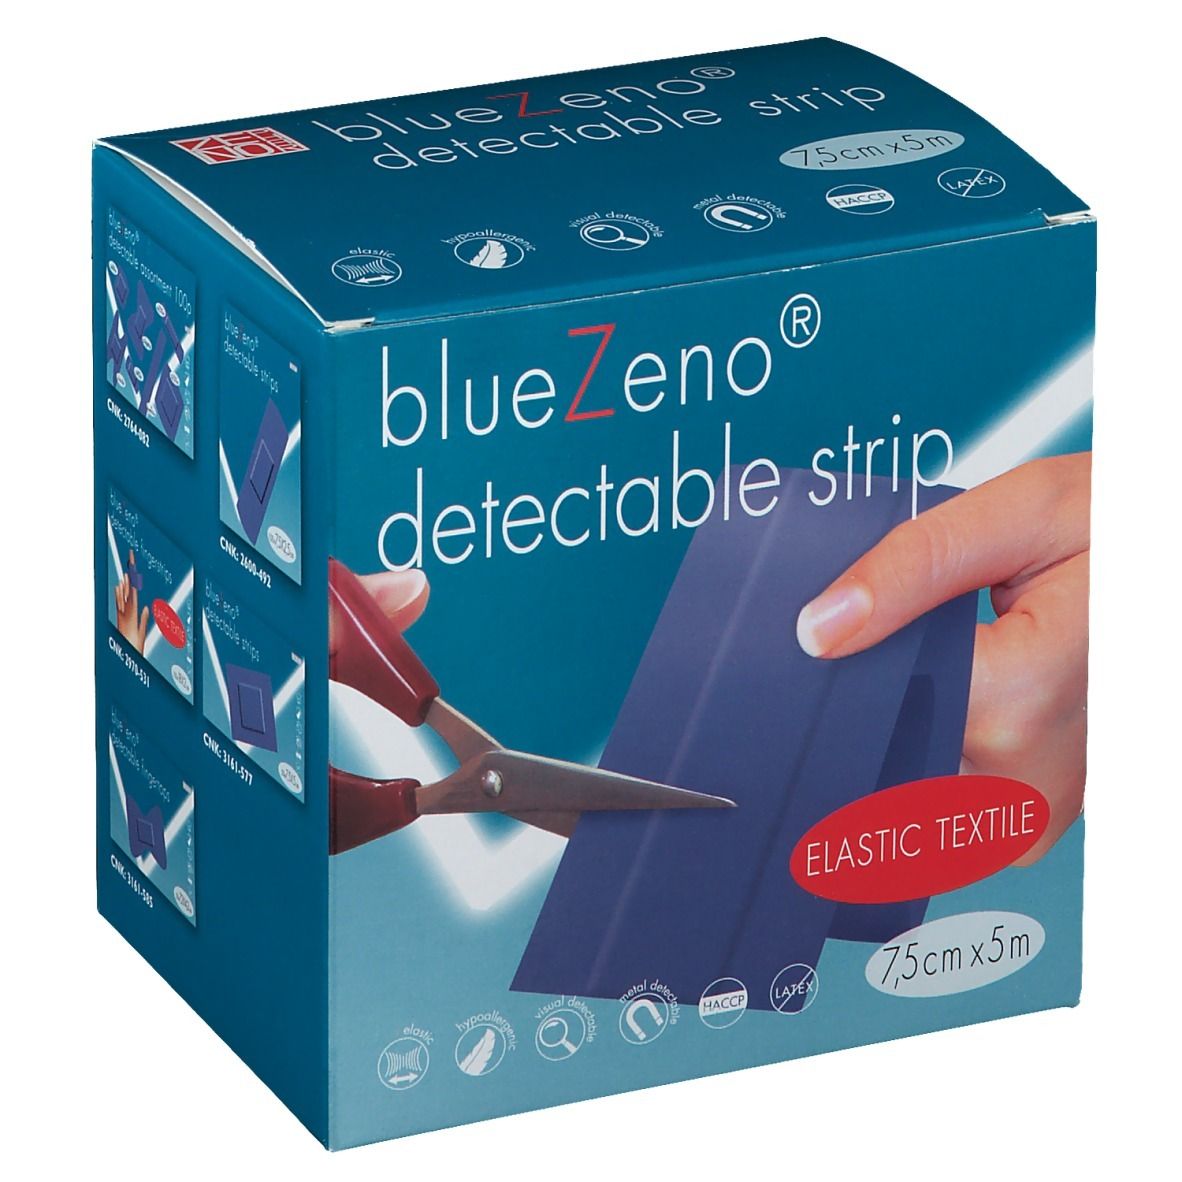 Bluezeno® Detectable Strip 7.5 cm x 5 m